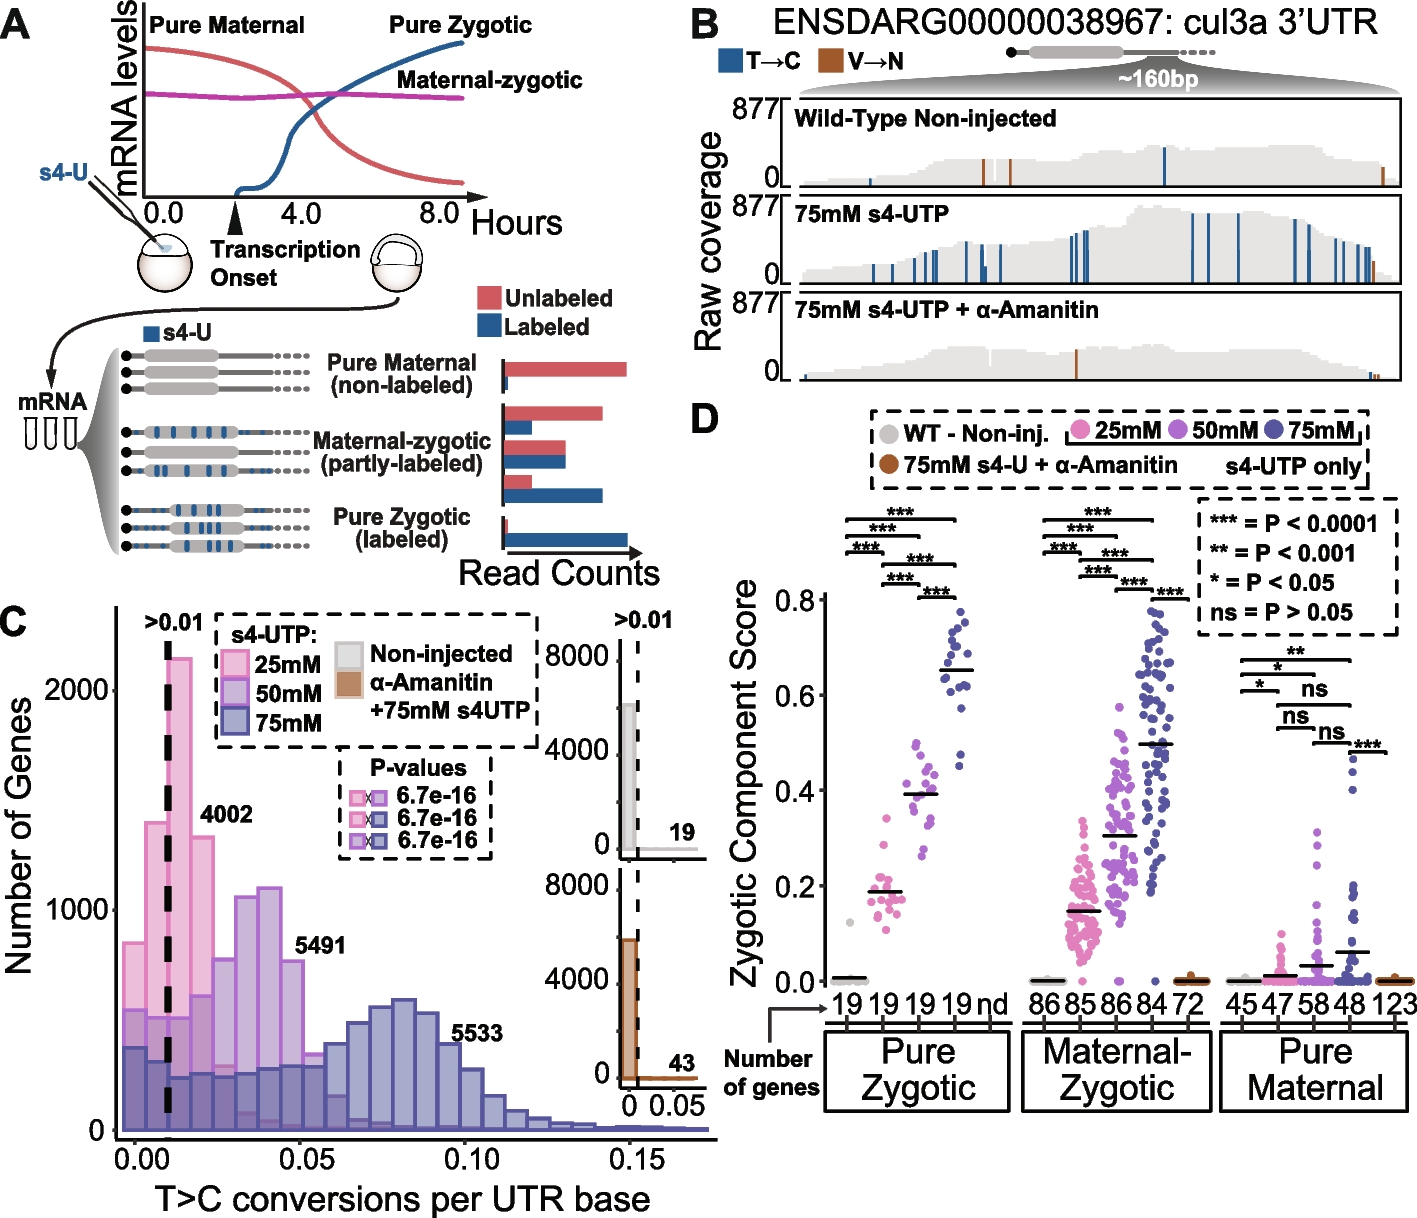 miR-430 regulates zygotic mRNA during zebrafish embryogenesis